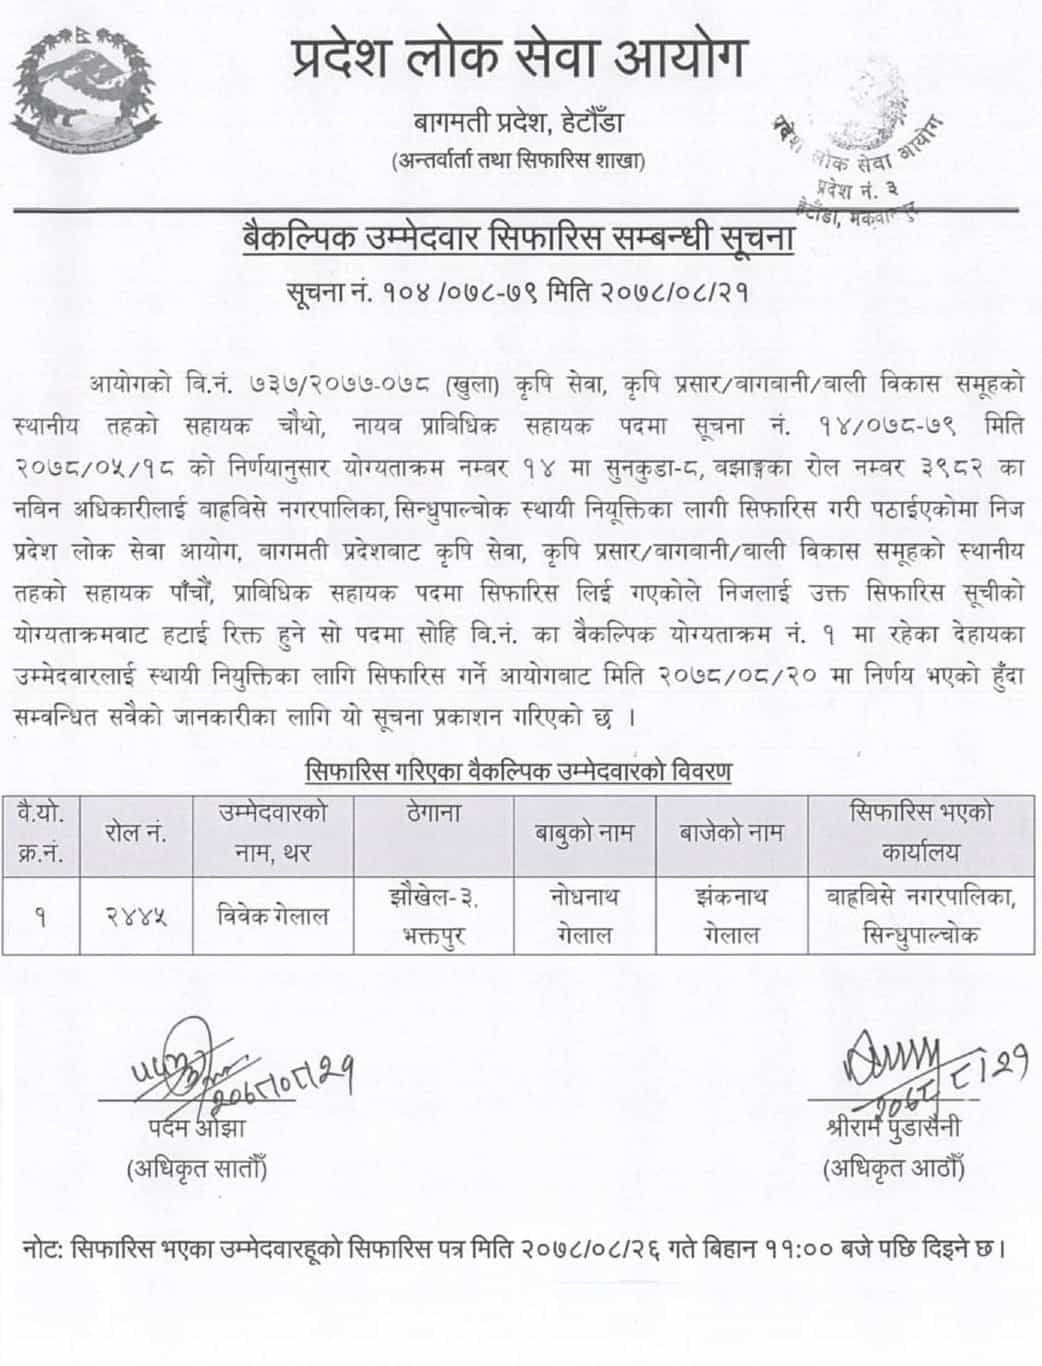 Bagmati Pradesh Lok Sewa Aayog Recommended Alternative Candidate for 4th Level JTA